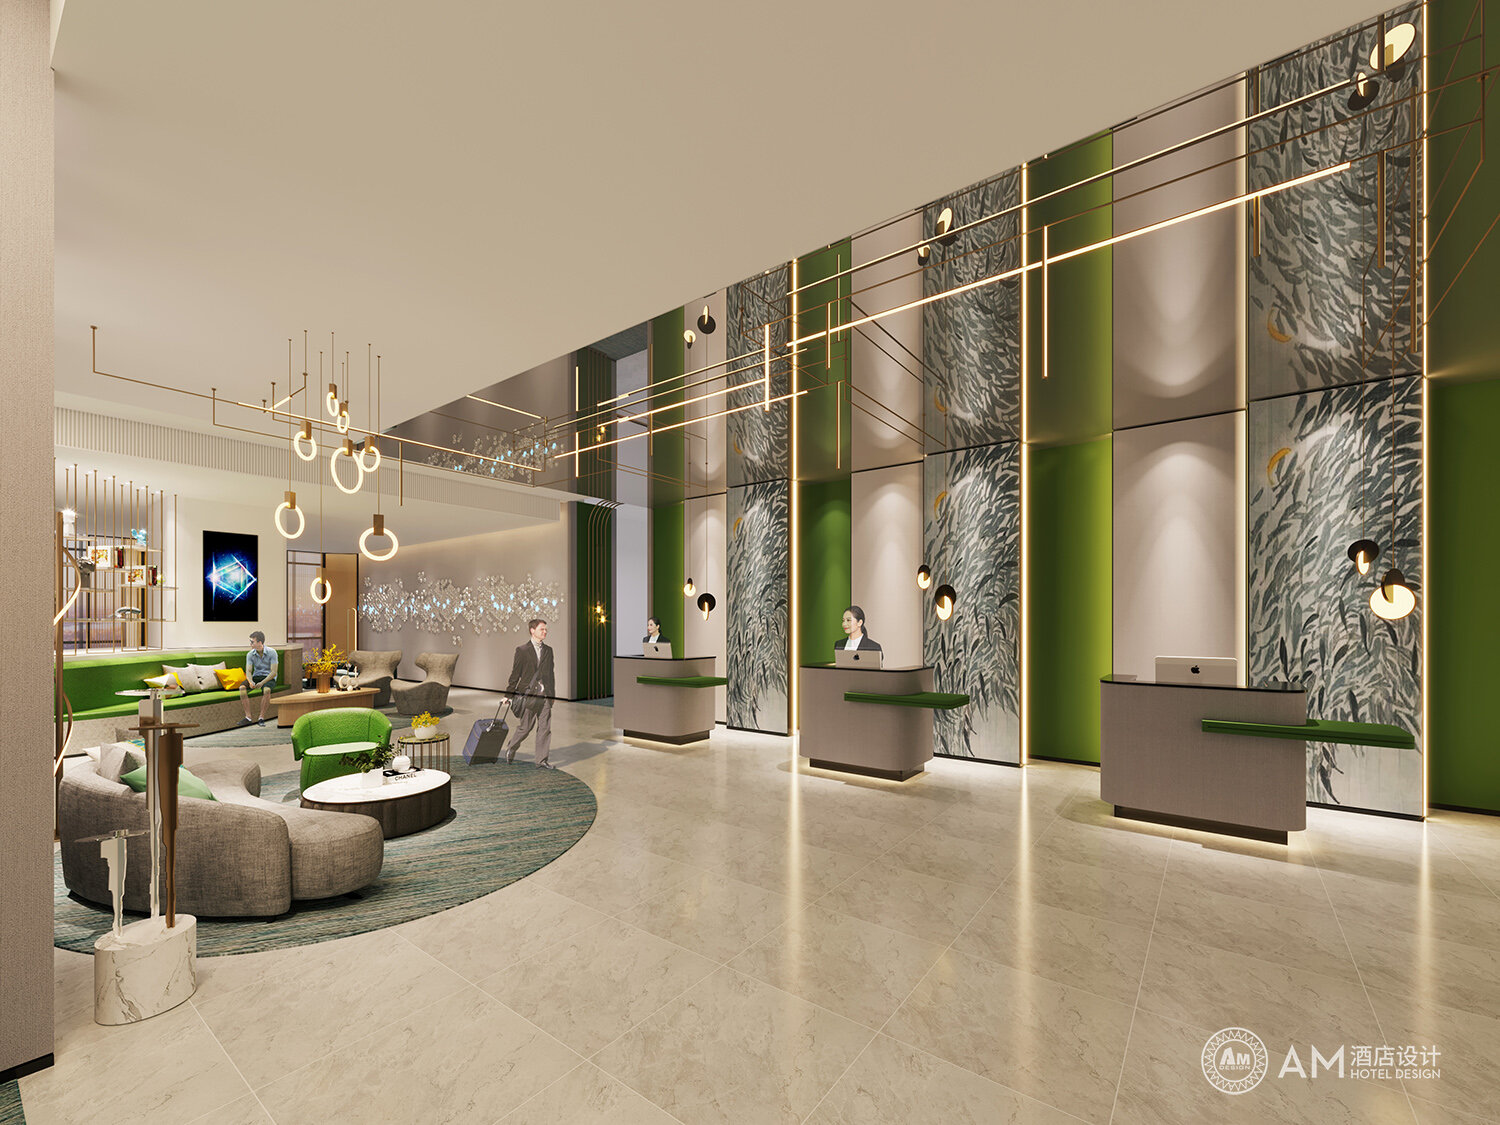 AM DESIGN | Weinan Jianguo Hotel lobby & front desk design